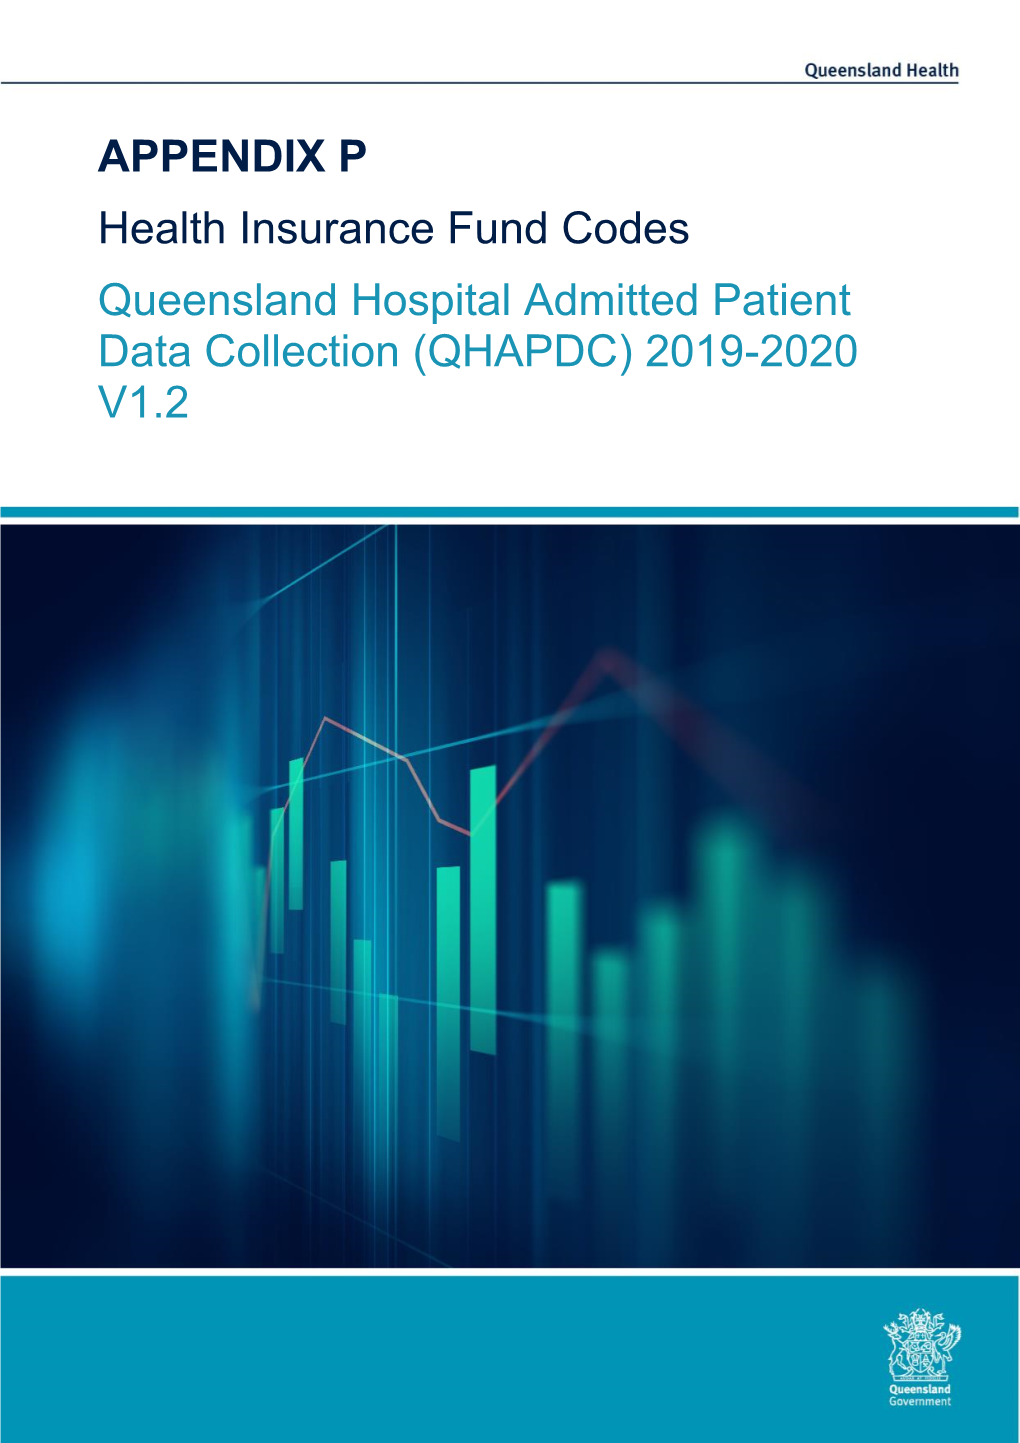 Appendix P: Health Insurance Fund Codes